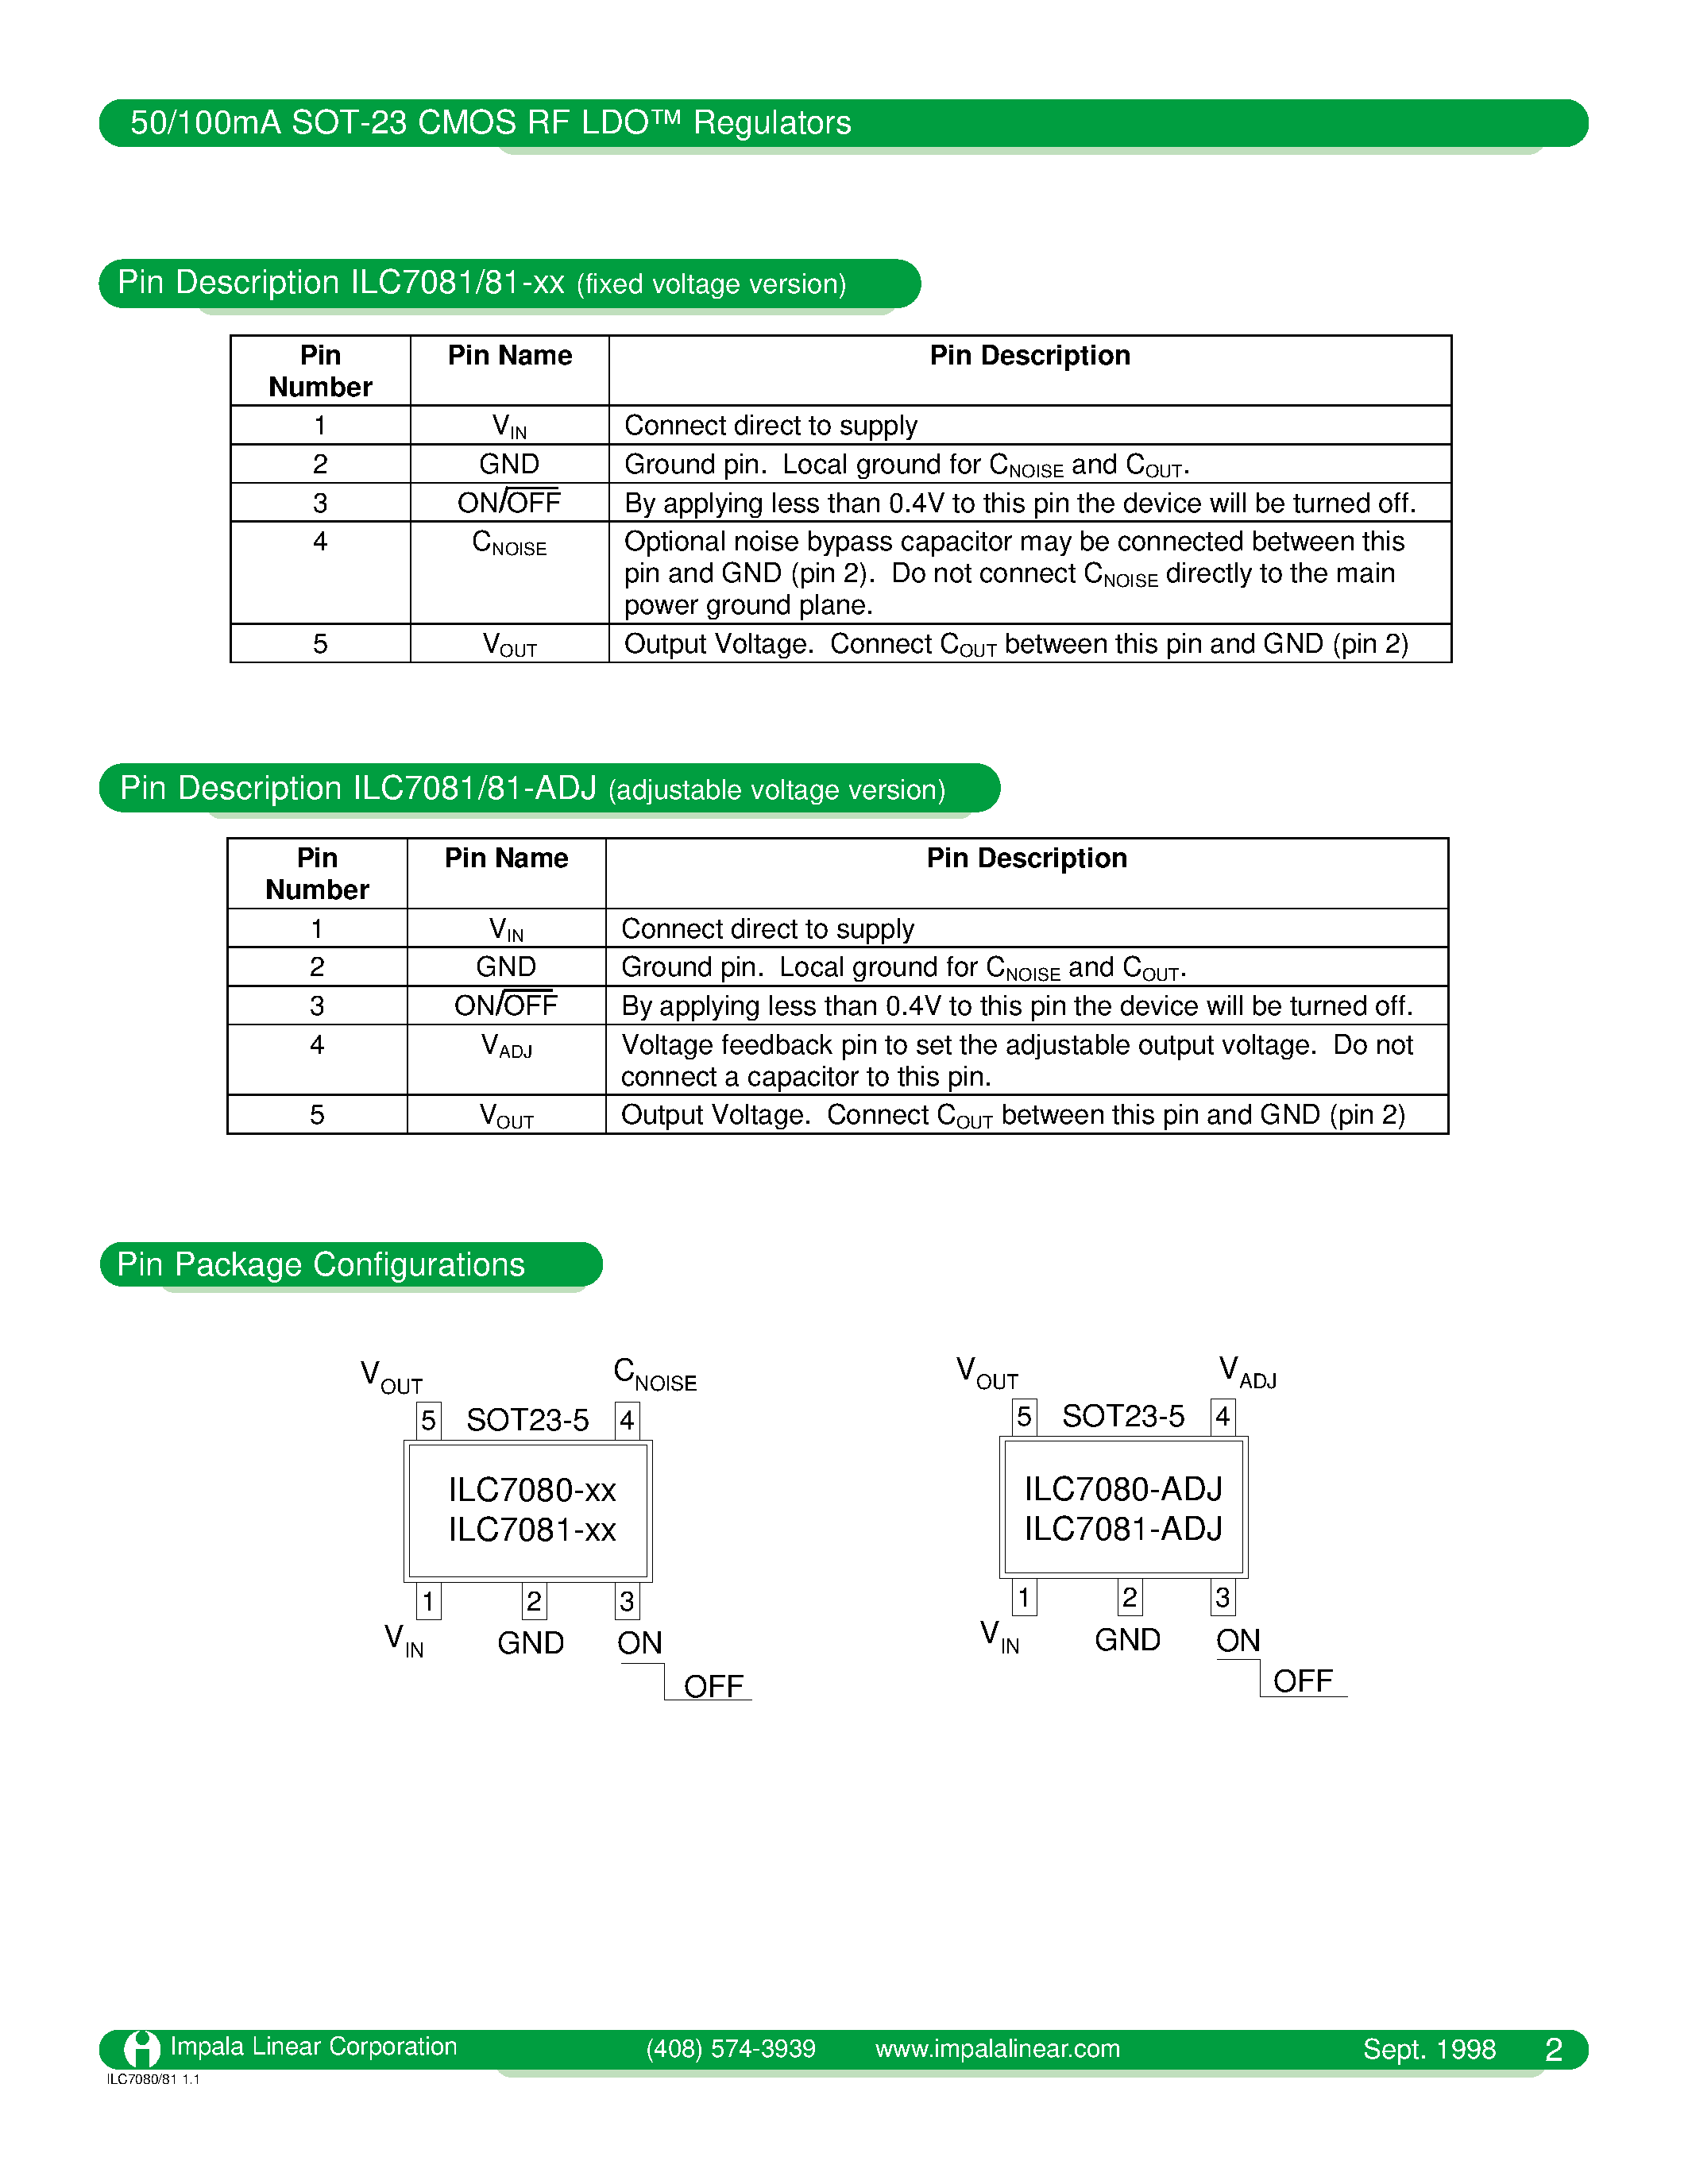 Datasheet ILC7080 - 50/100M SOT-23 CMOS RF LDO REGULATORS page 2